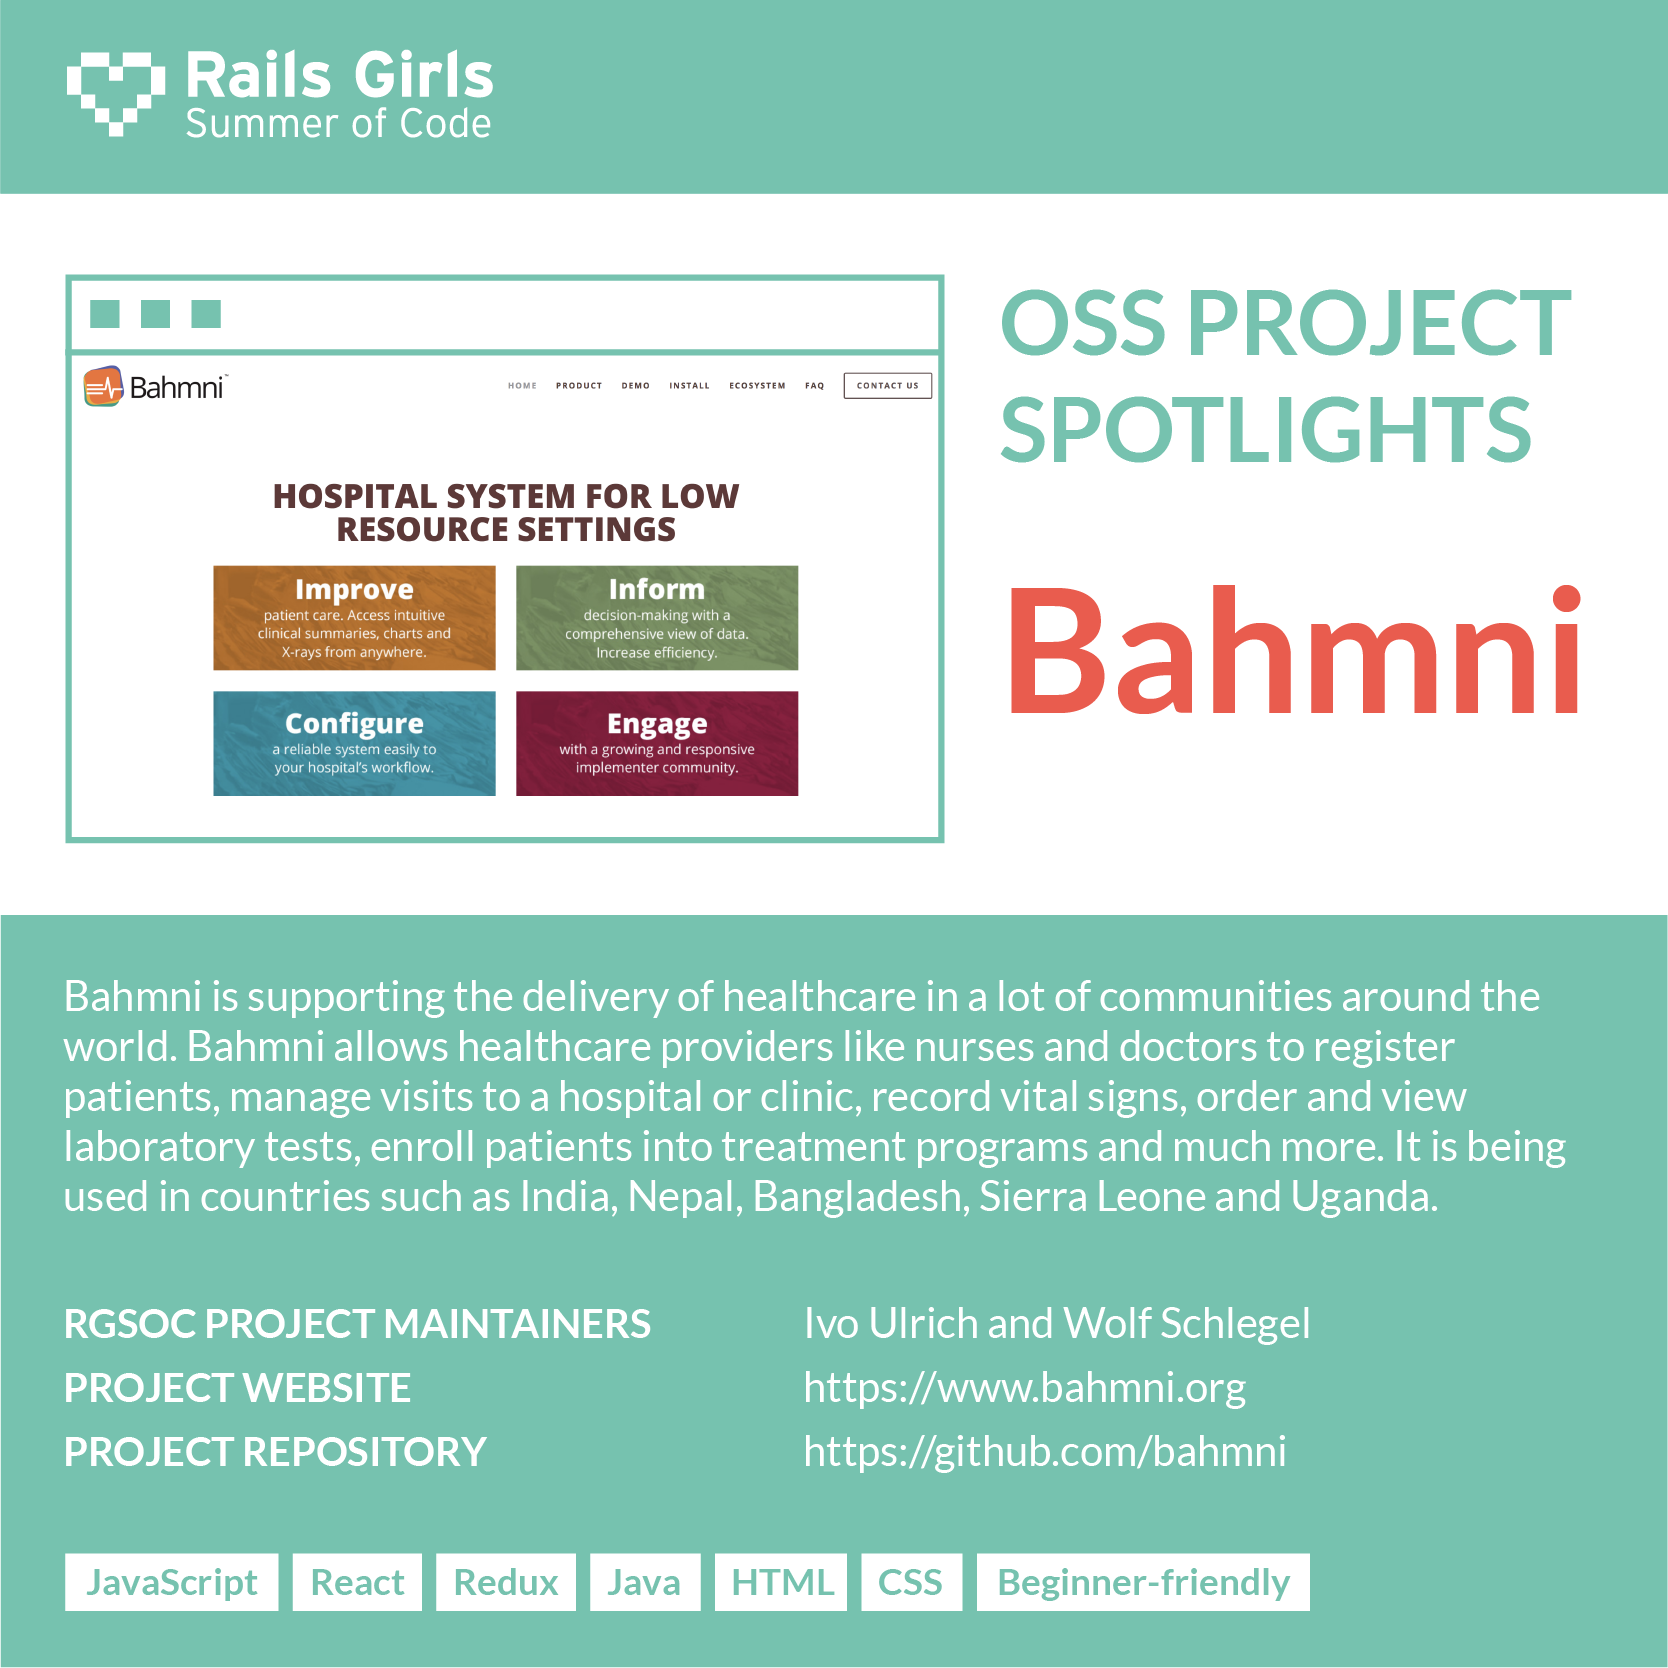 OSS Project Spotlight: Bahmni